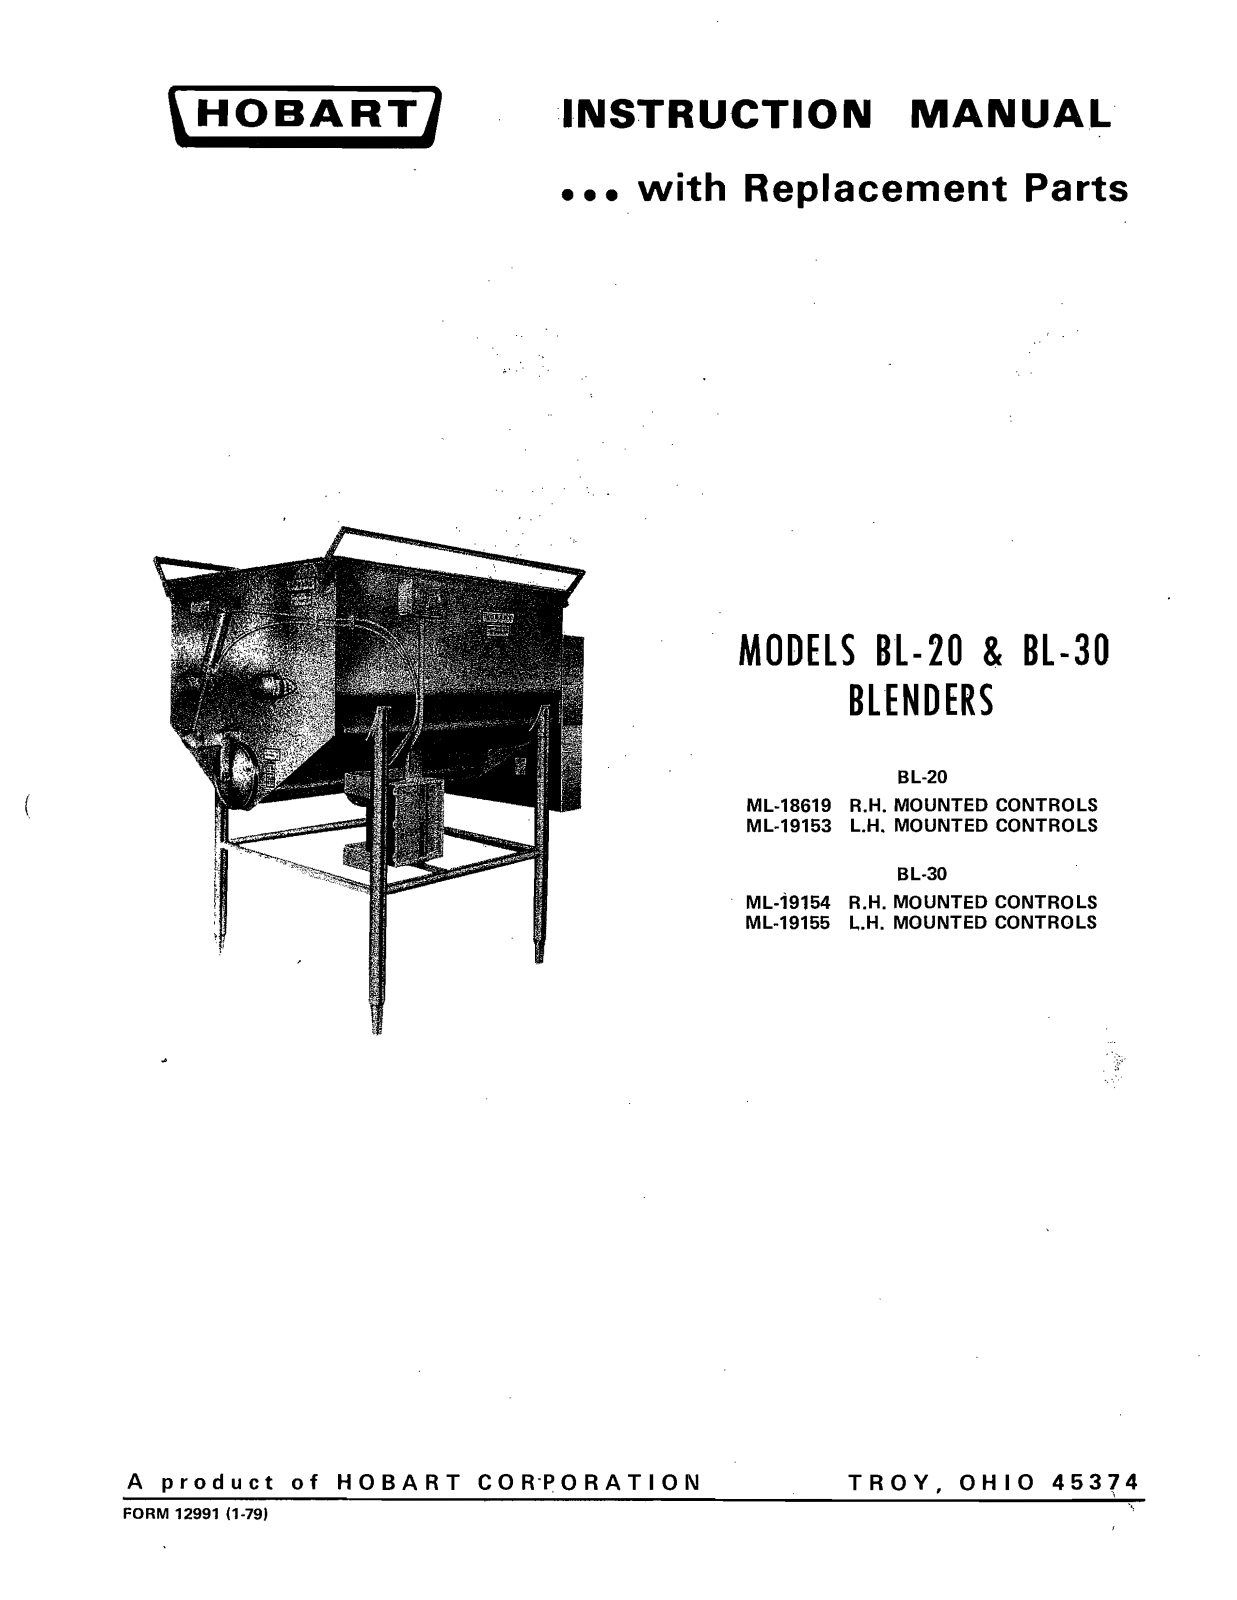 Hobart BL-20 Installation Manual